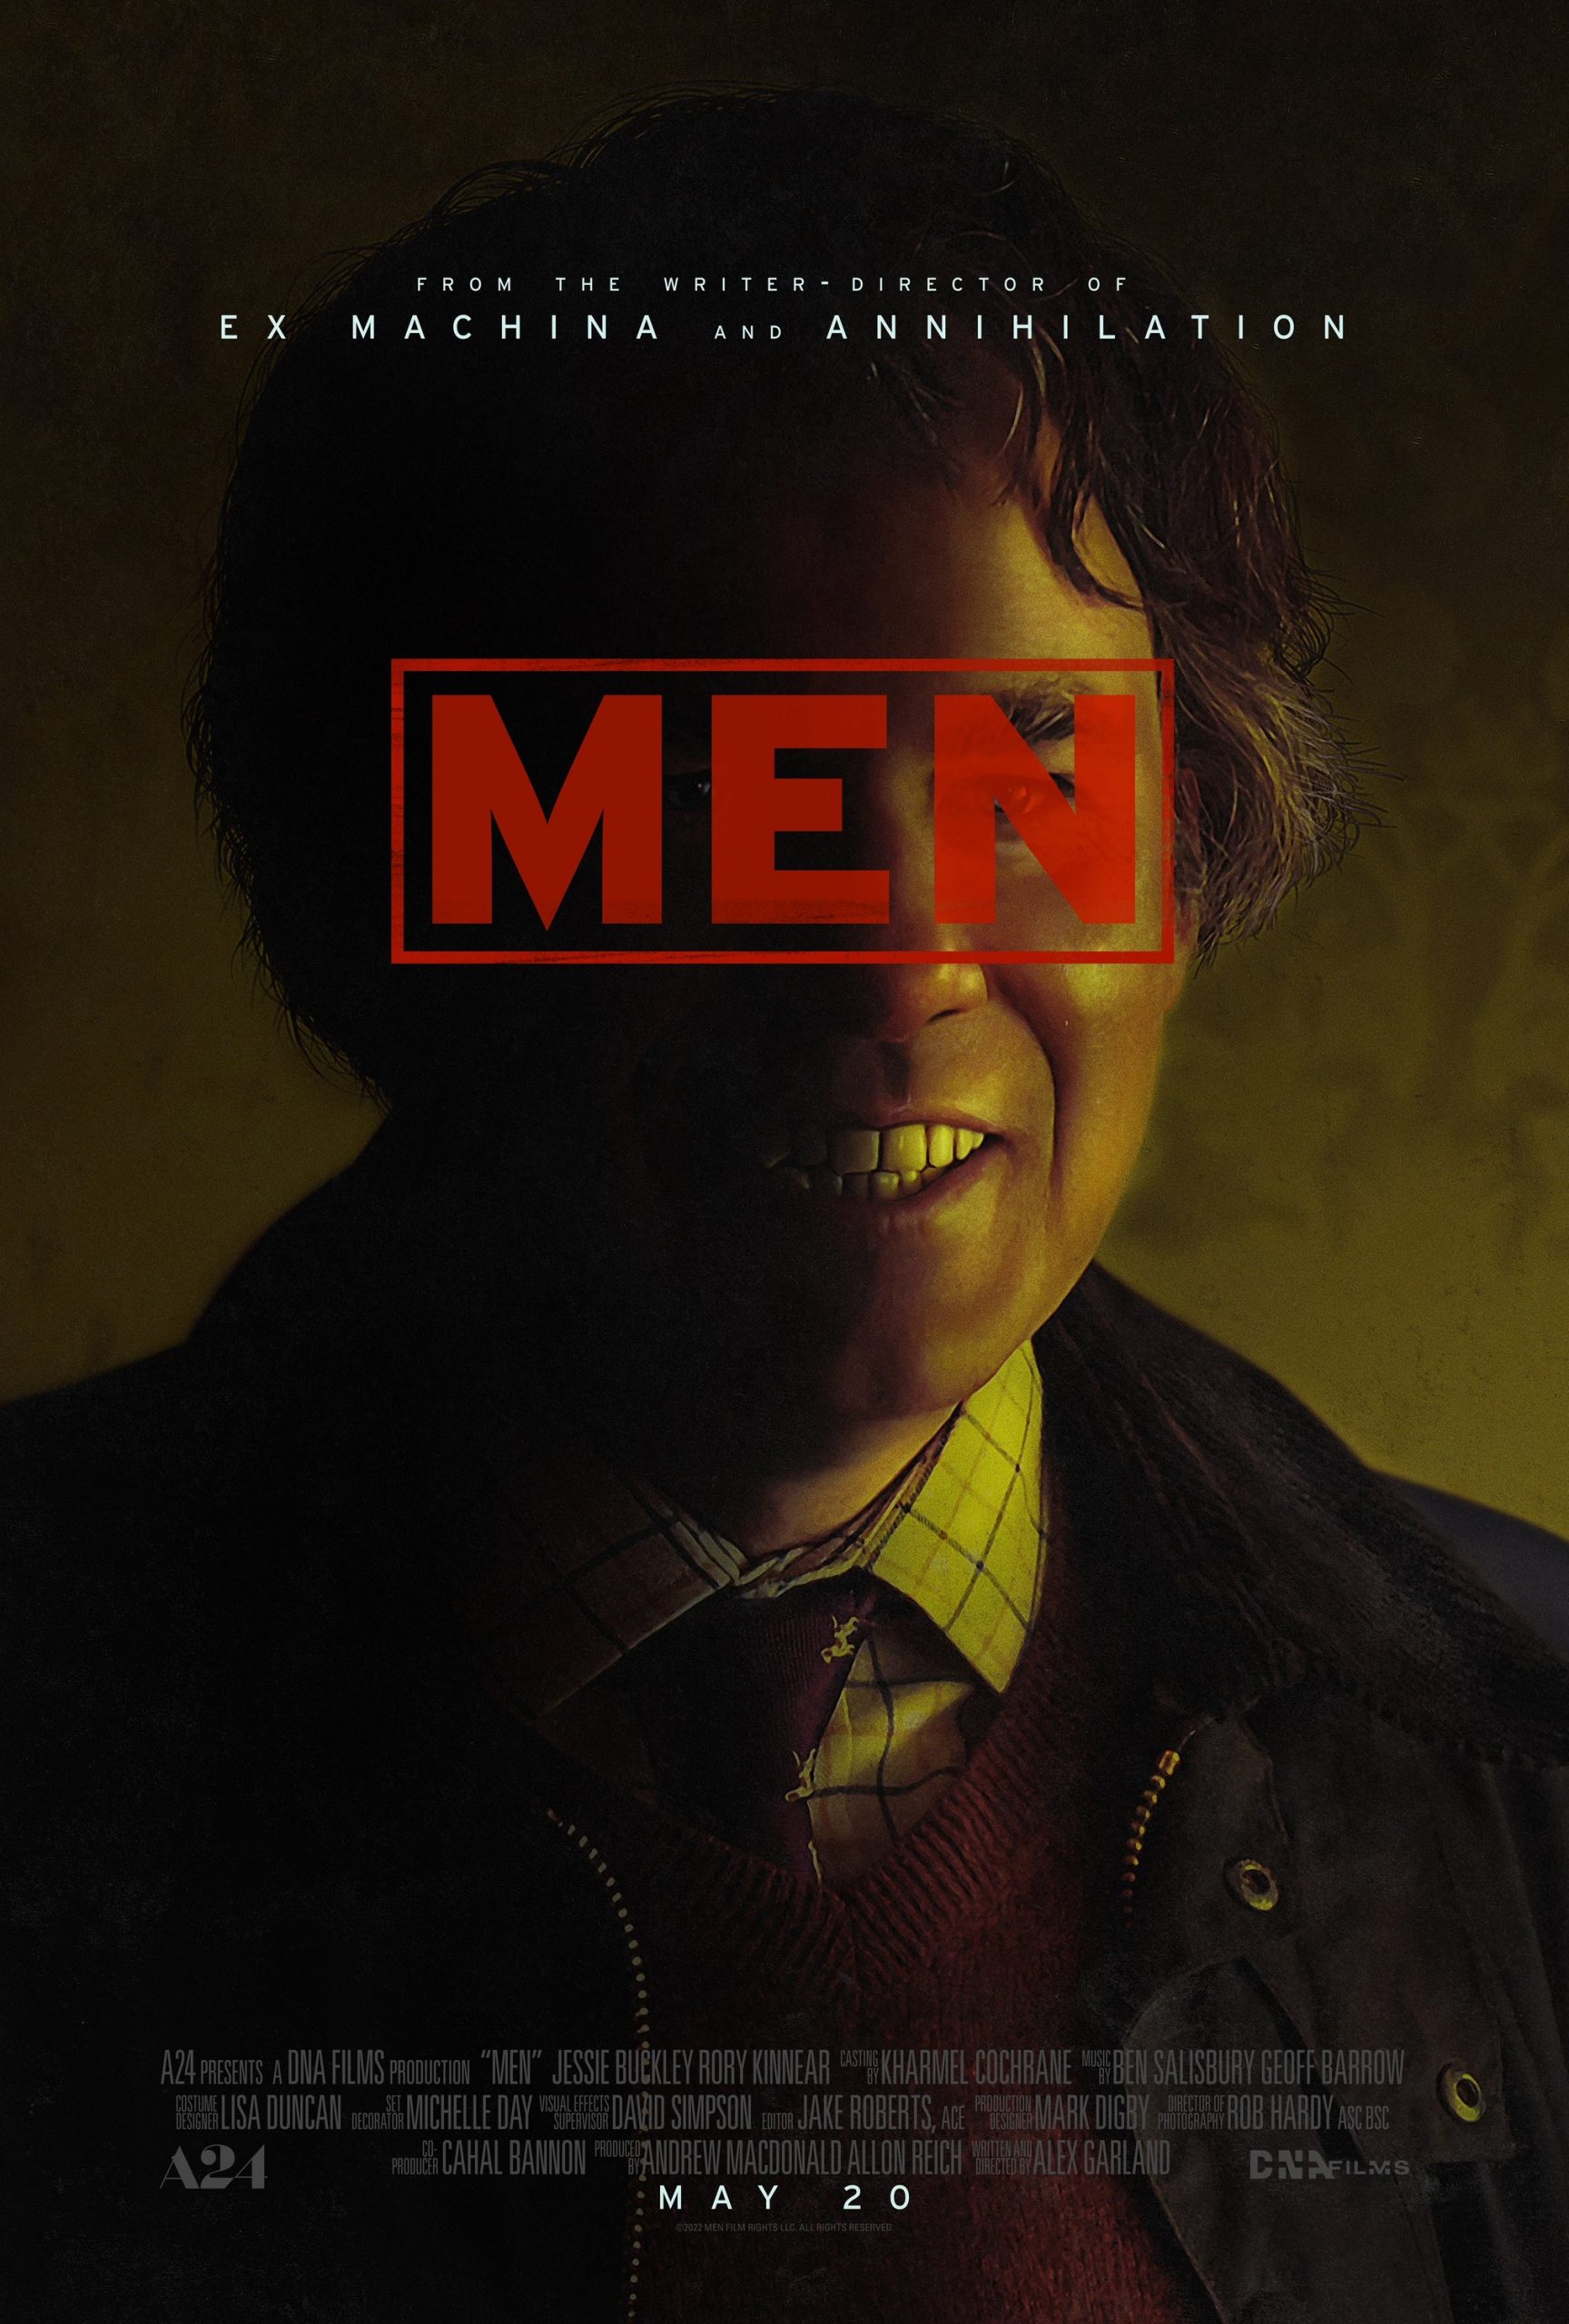 Assista ao Trailer de 'Men', novo filme de terror bizarro da A24